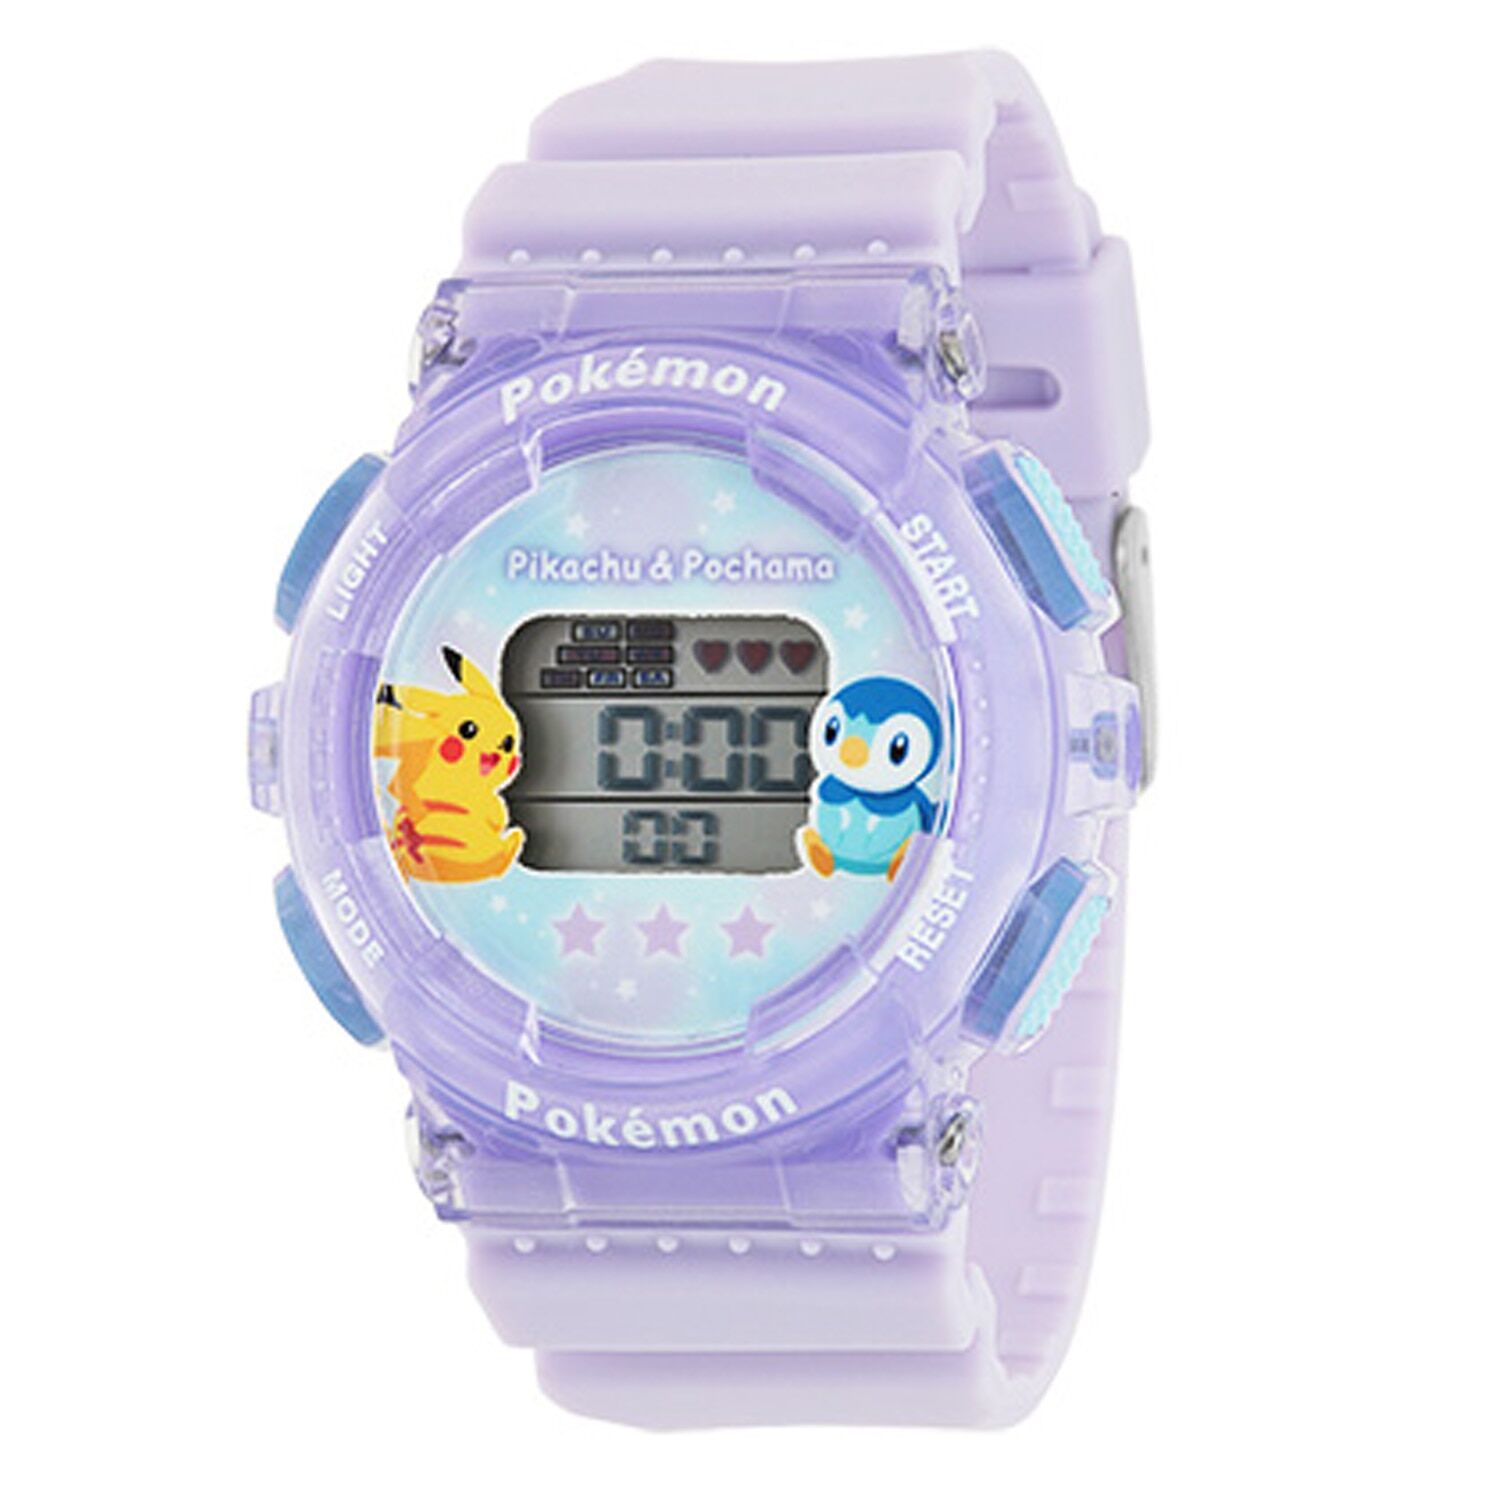 Pokémon Center Original Digital Watch Purple